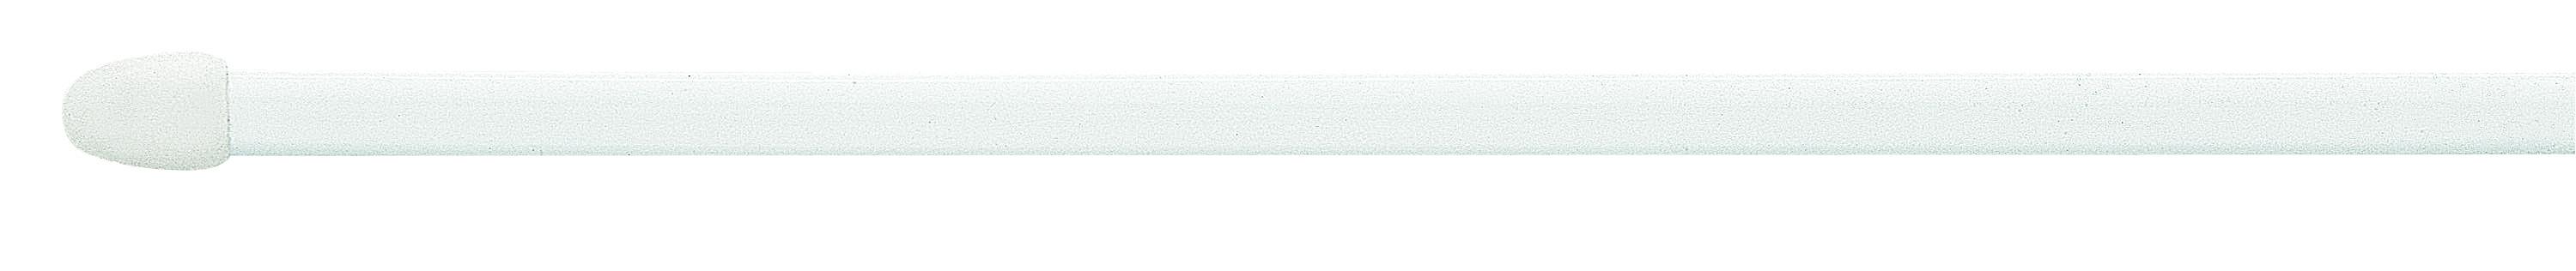 Vitragenstange Weiß L: 40-60 cm, 2er-Set - Weiß, KONVENTIONELL, Kunststoff/Metall (40cm) - Ondega